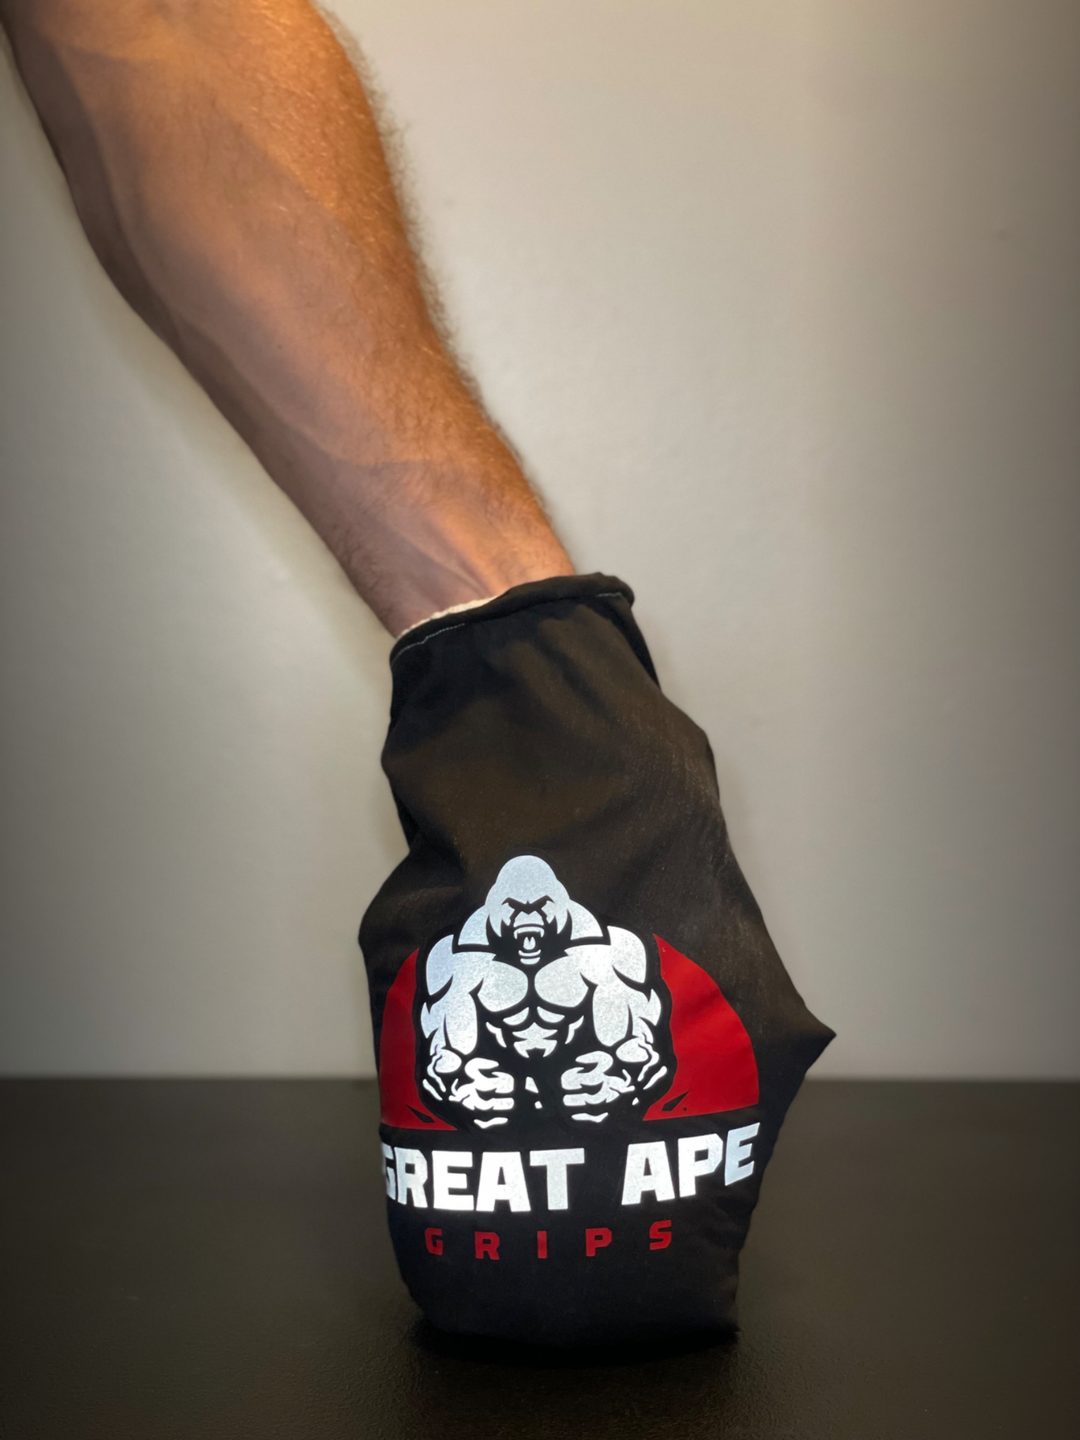 Great Ape Grip Gray